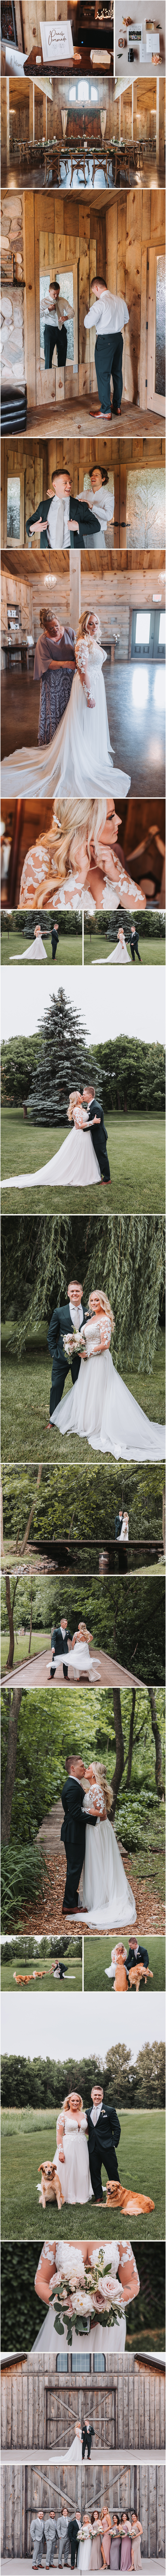 Minnesota Wedding Photographer Image Gallery